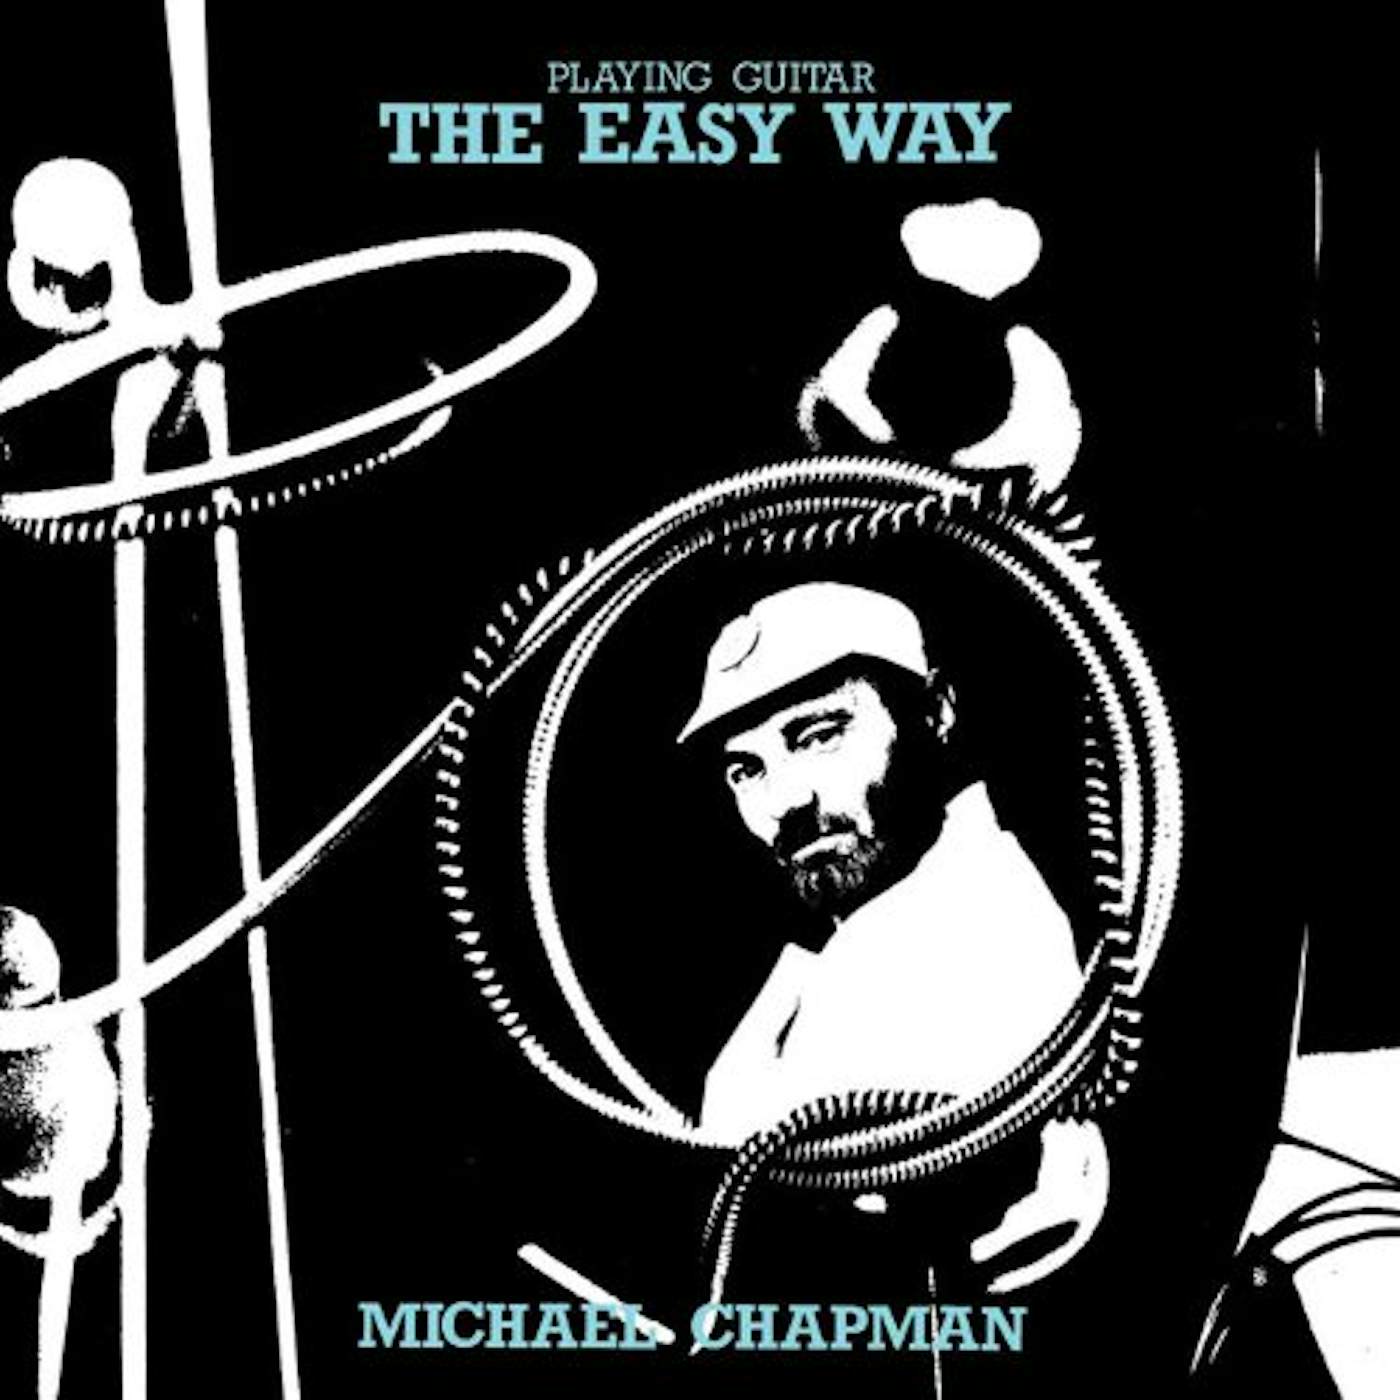 Michael Chapman PLAYING GUITAR THE EASY WAY CD